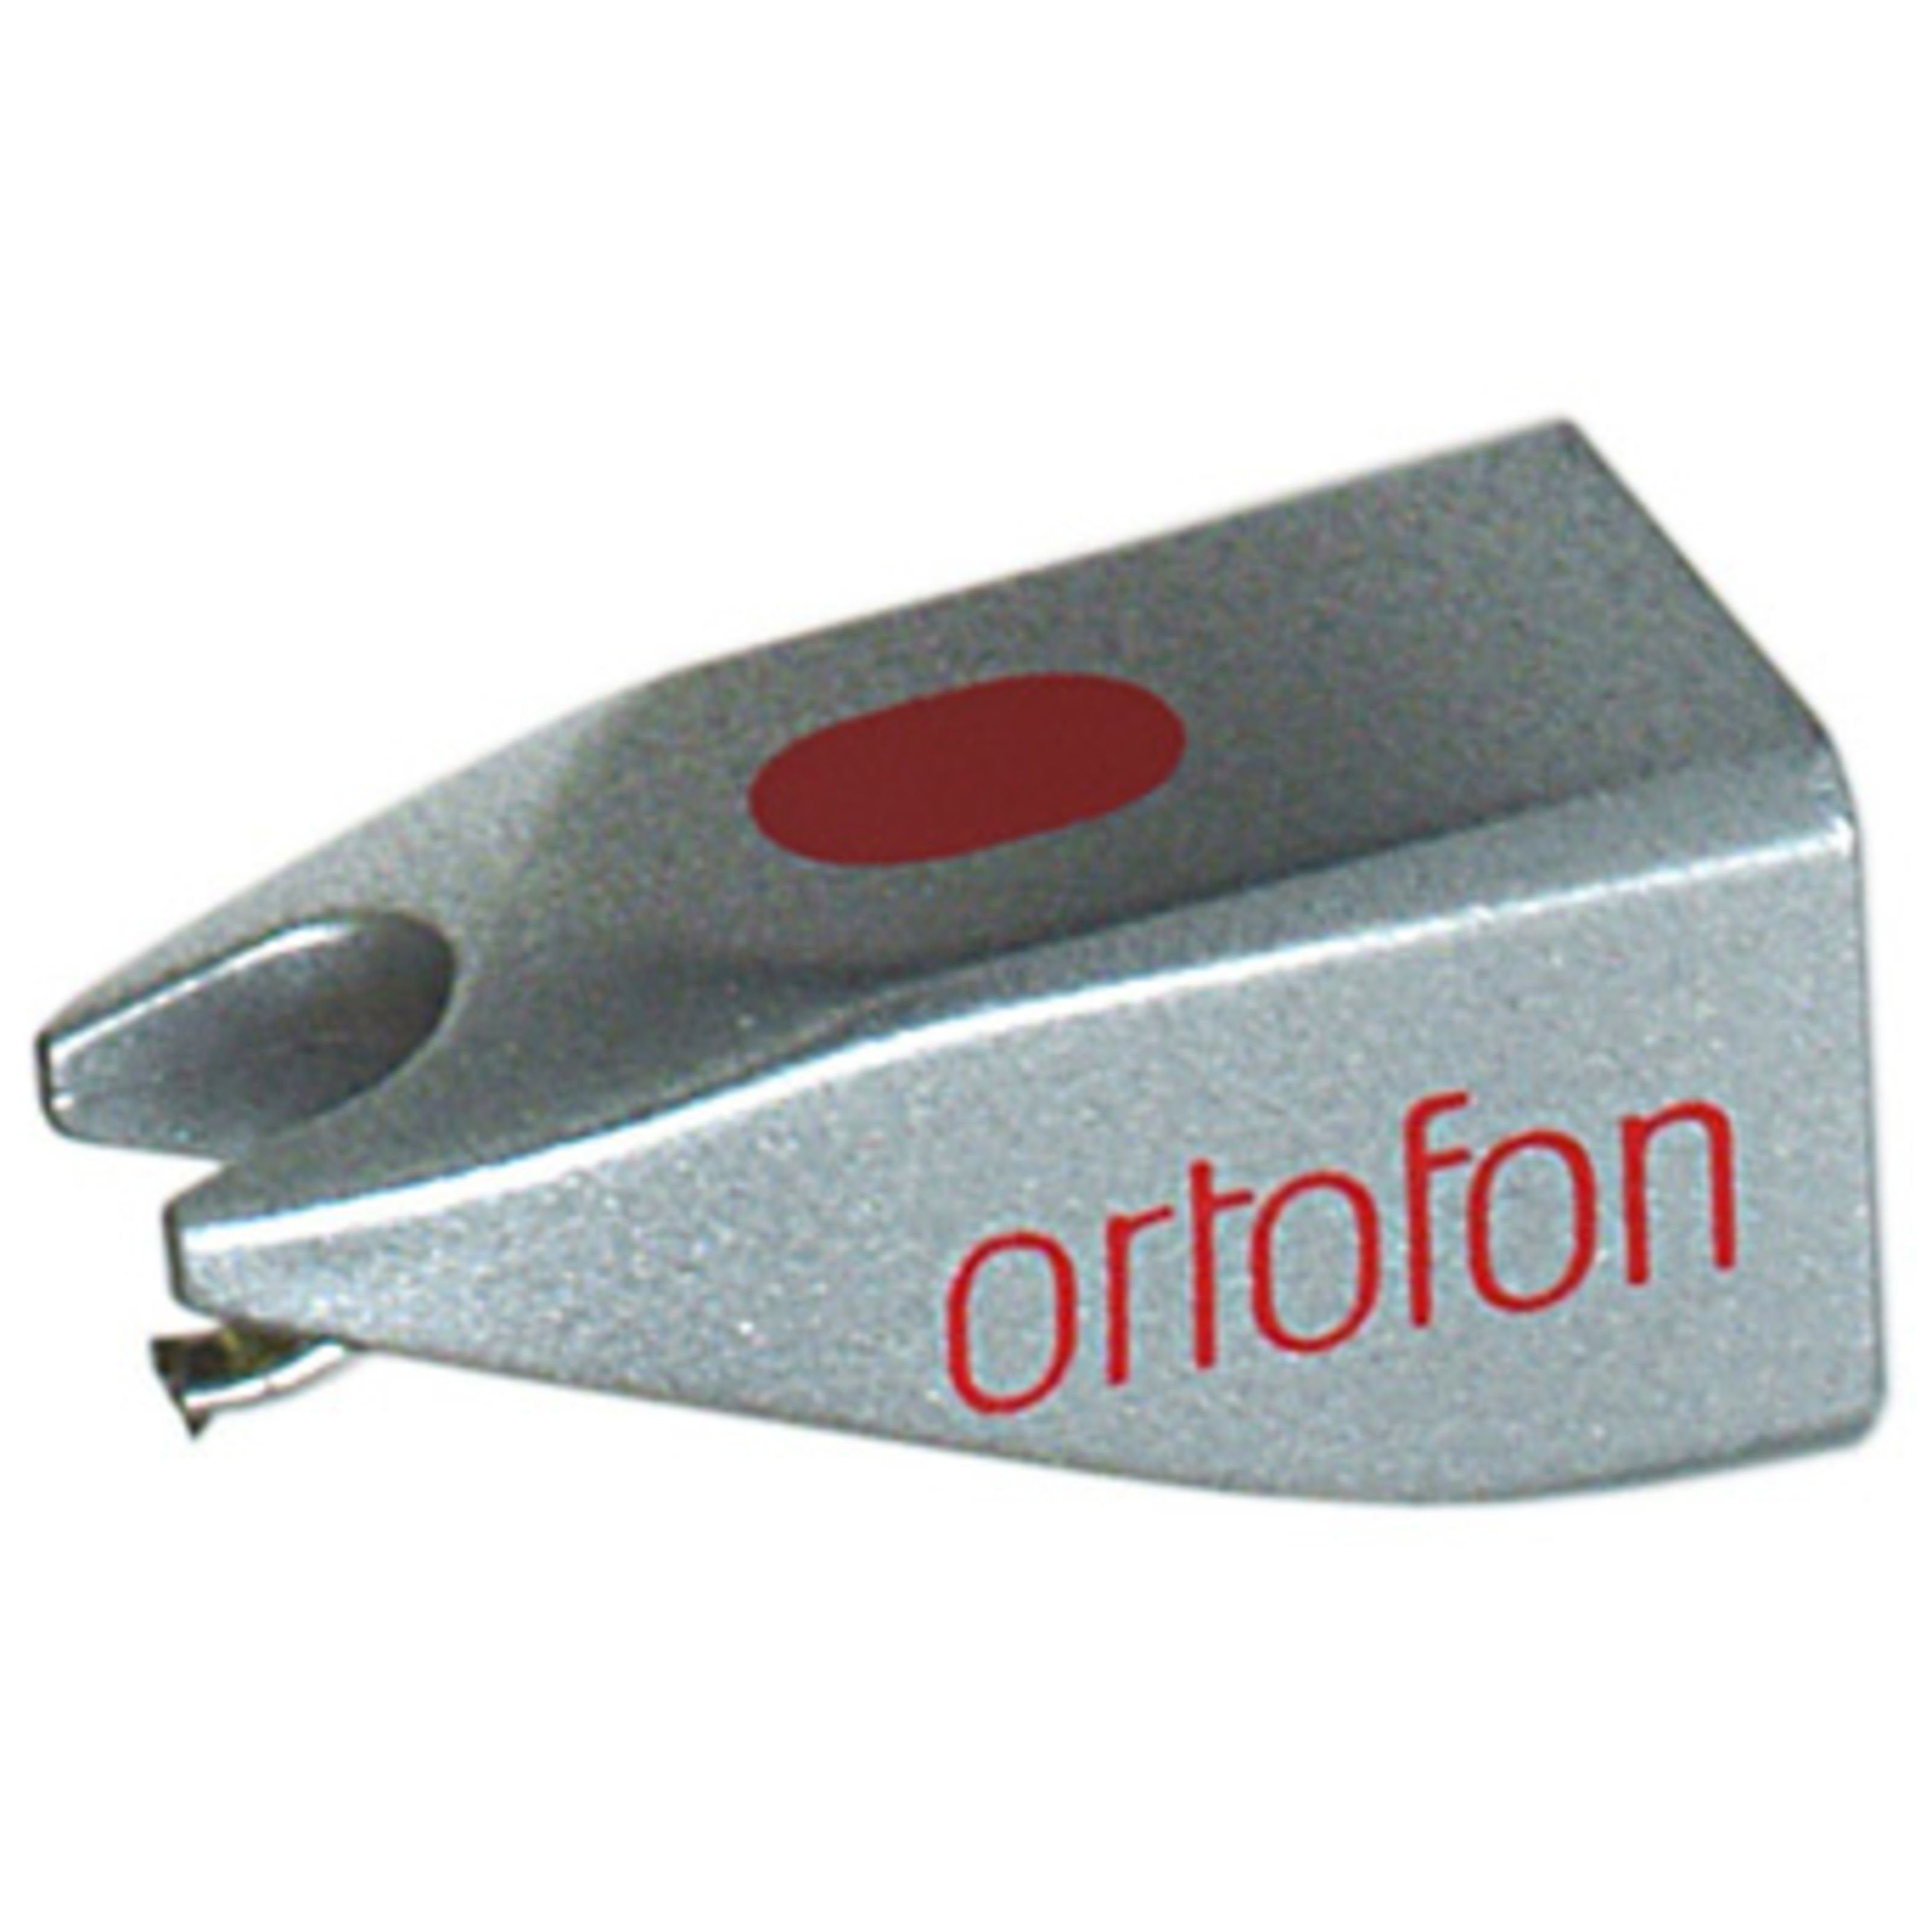 ortofon Tonabnehmer, (Ersatznadel Pro, Tonabnehmer-Systeme, Headshell-Systeme), Ersatznadel Pro - Headshell Tonabnehmer System